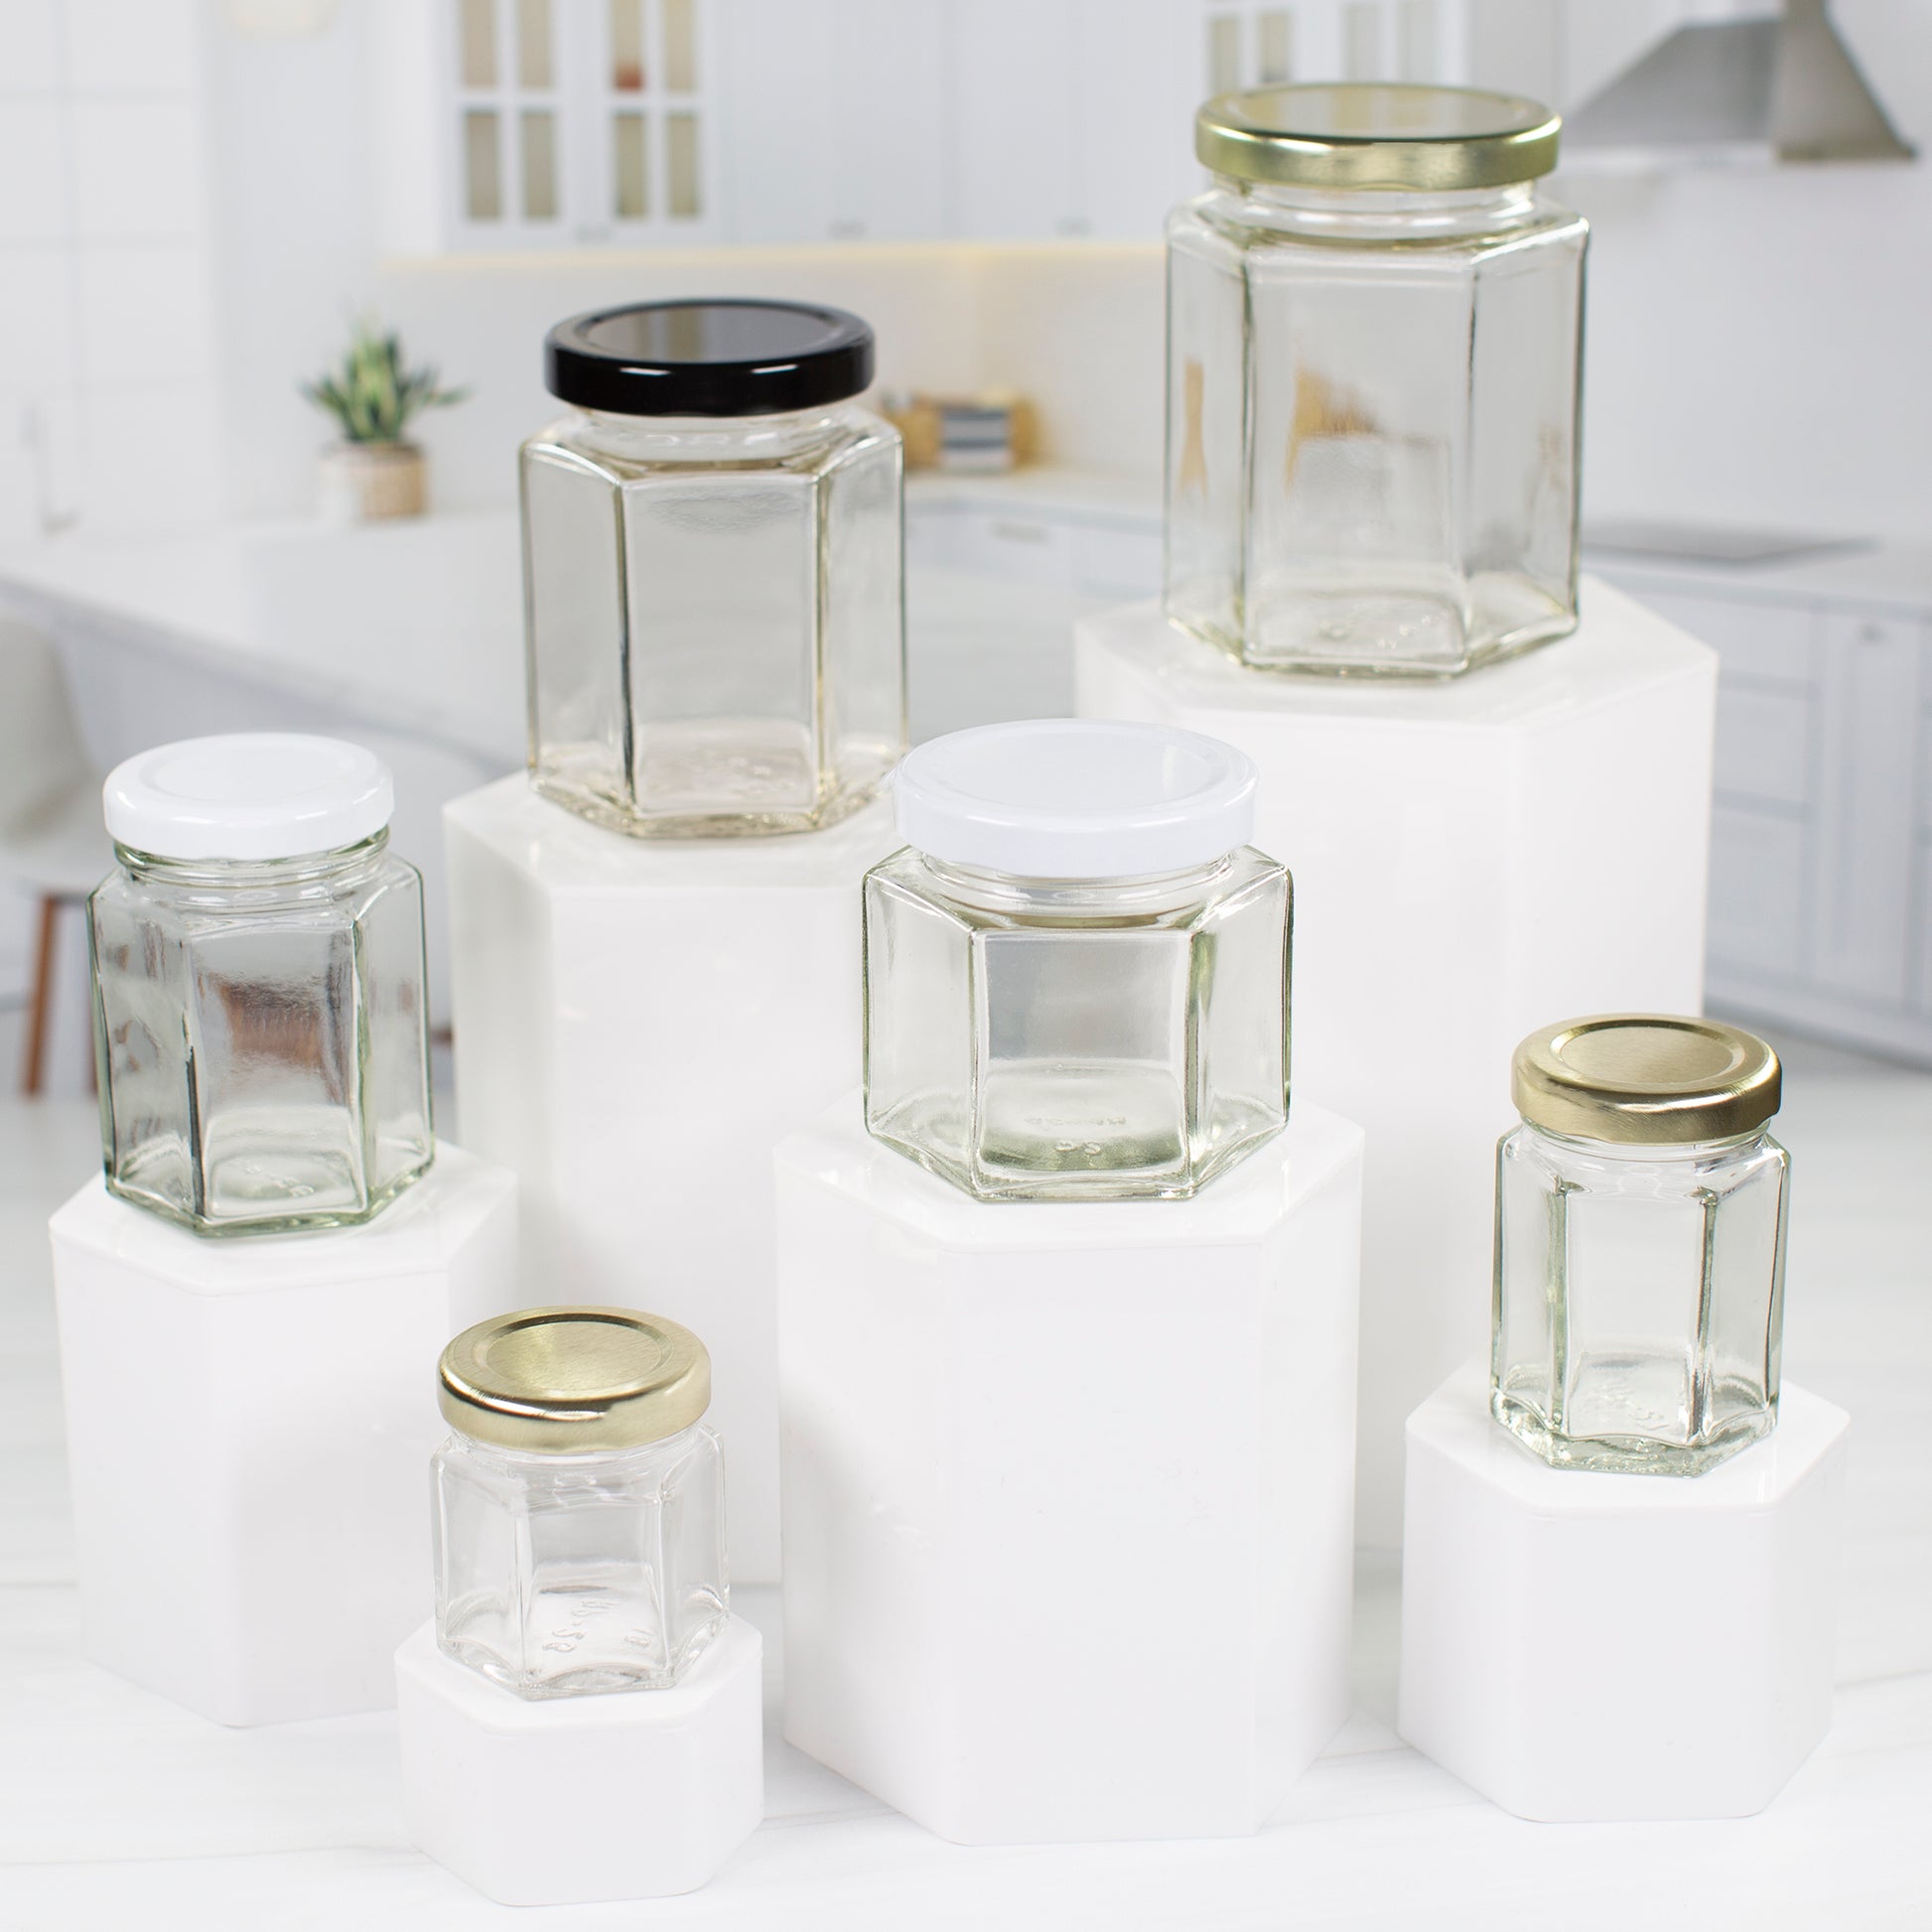 Hexagonal Glass Spice Jar with Metal Lid, 4 oz. - Fante's Kitchen